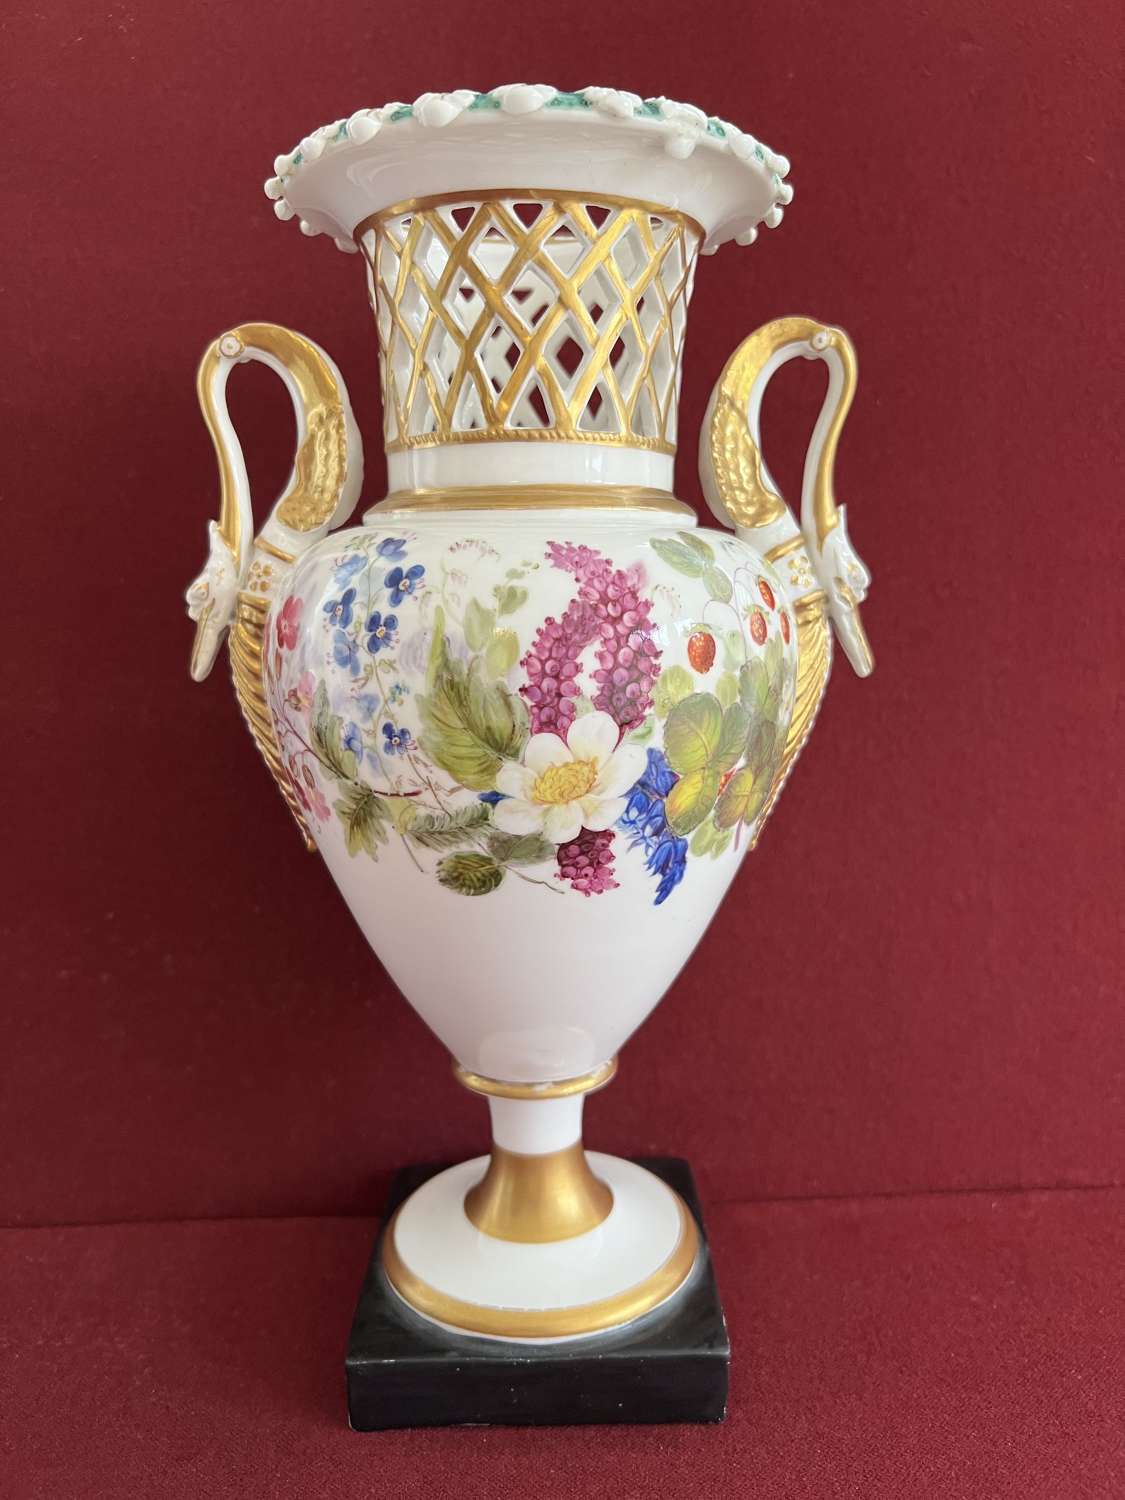 A British Porcelain Vase c.1815 in the manner of William Pollard